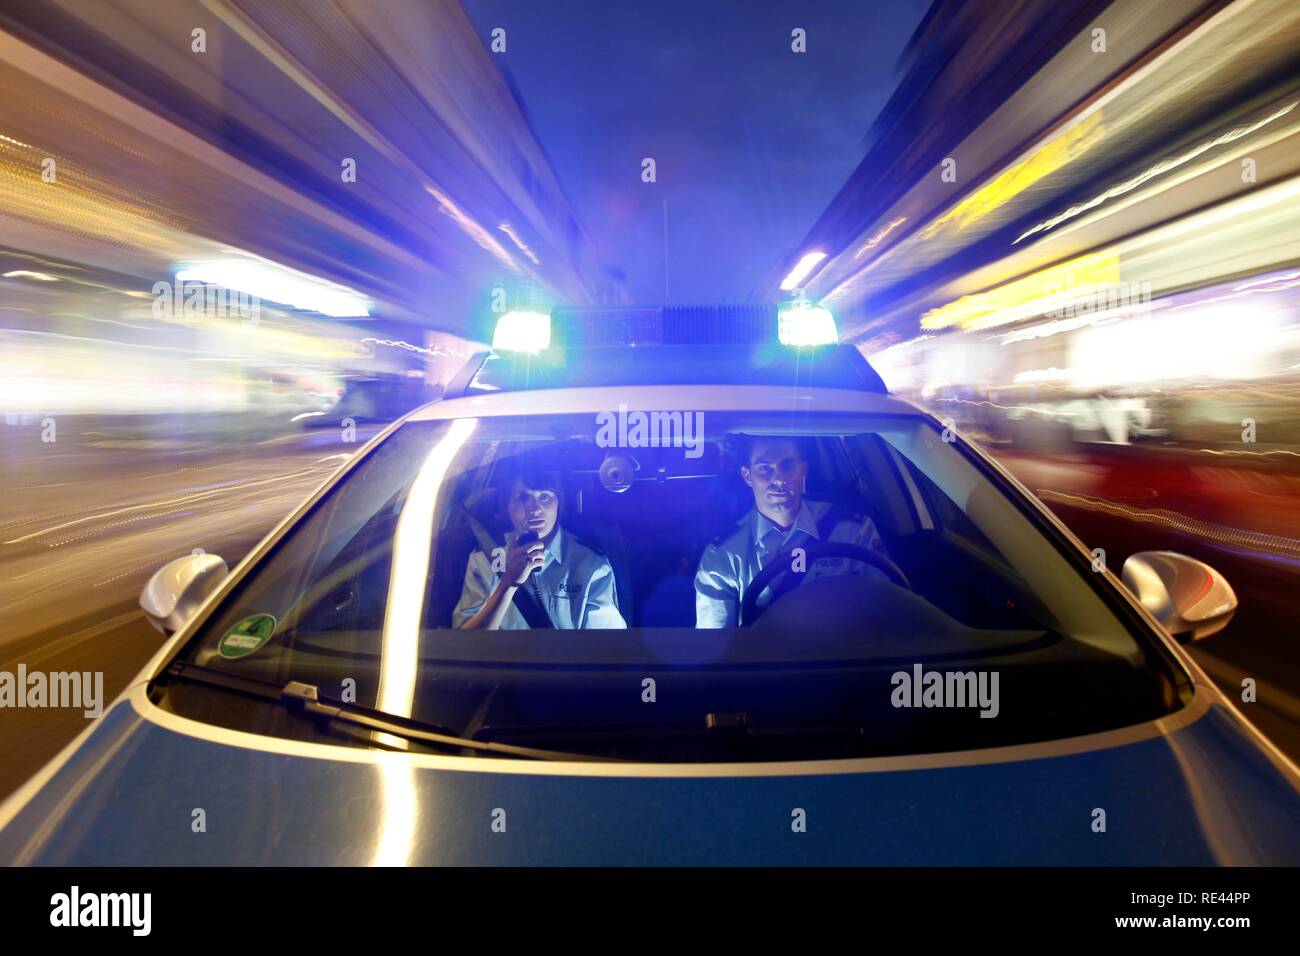 German Polizei Police Vehicle With Siren Lights Flashing Stock